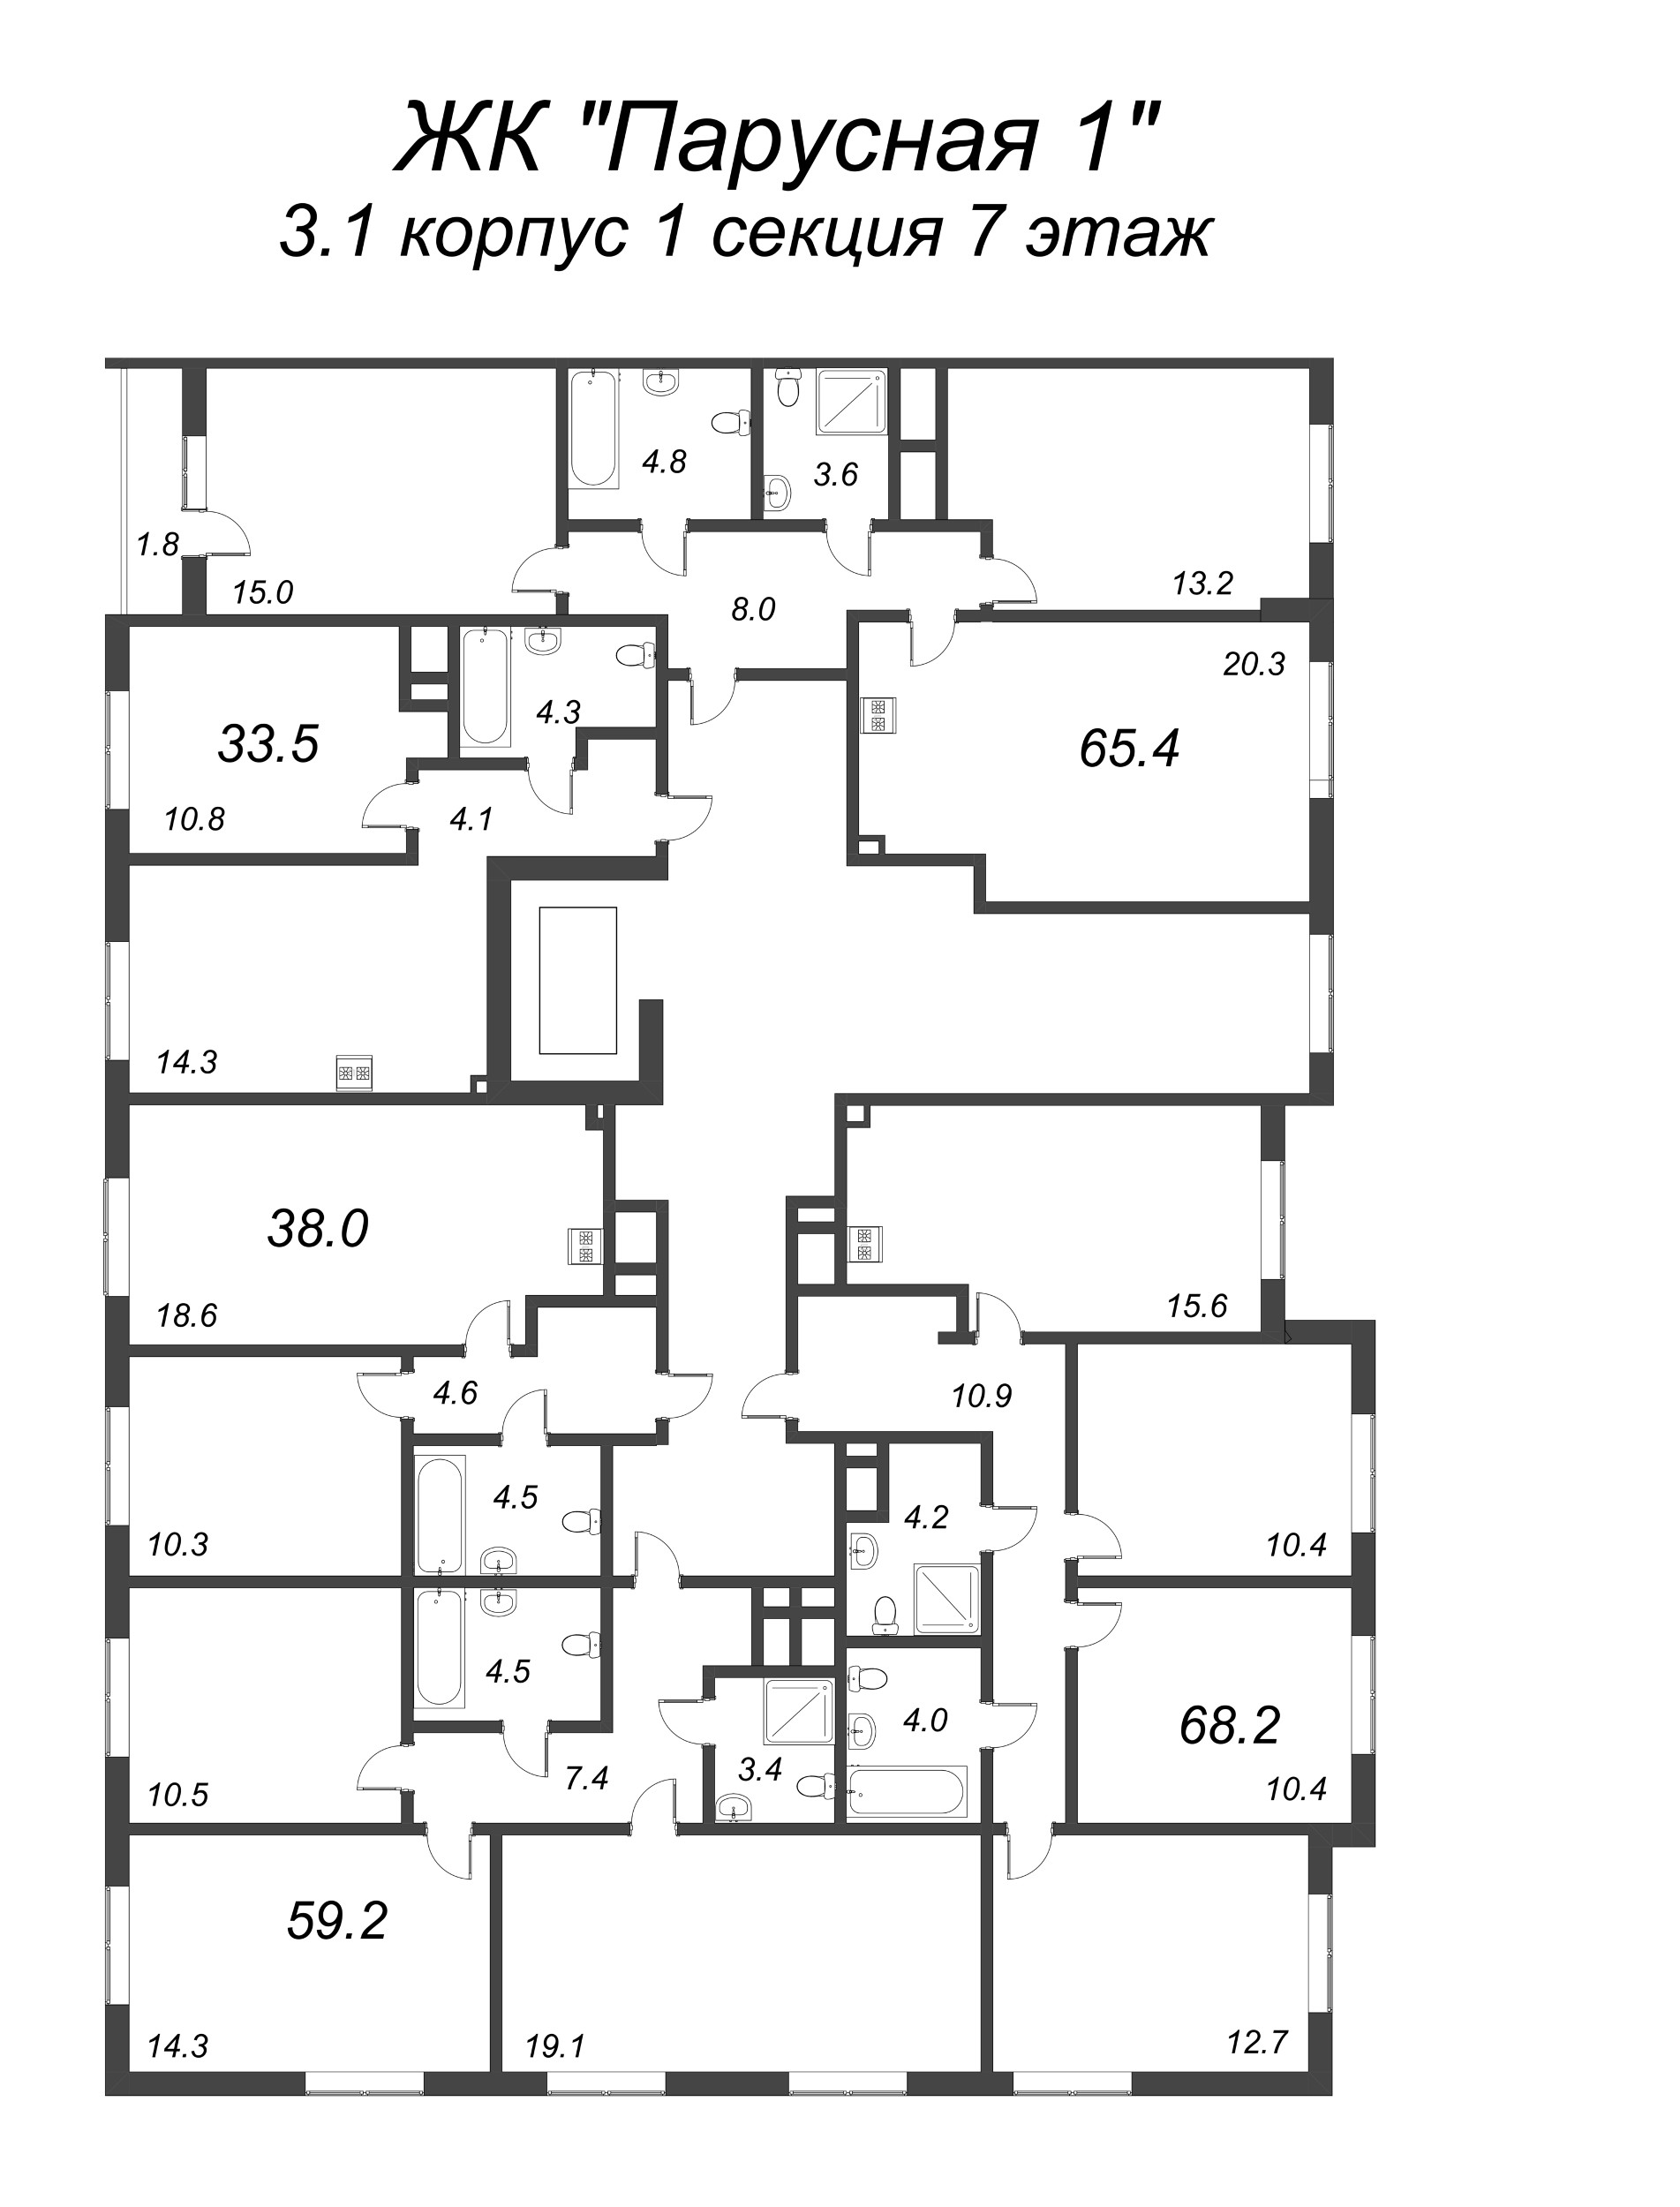 4-комнатная (Евро) квартира, 68.2 м² - планировка этажа